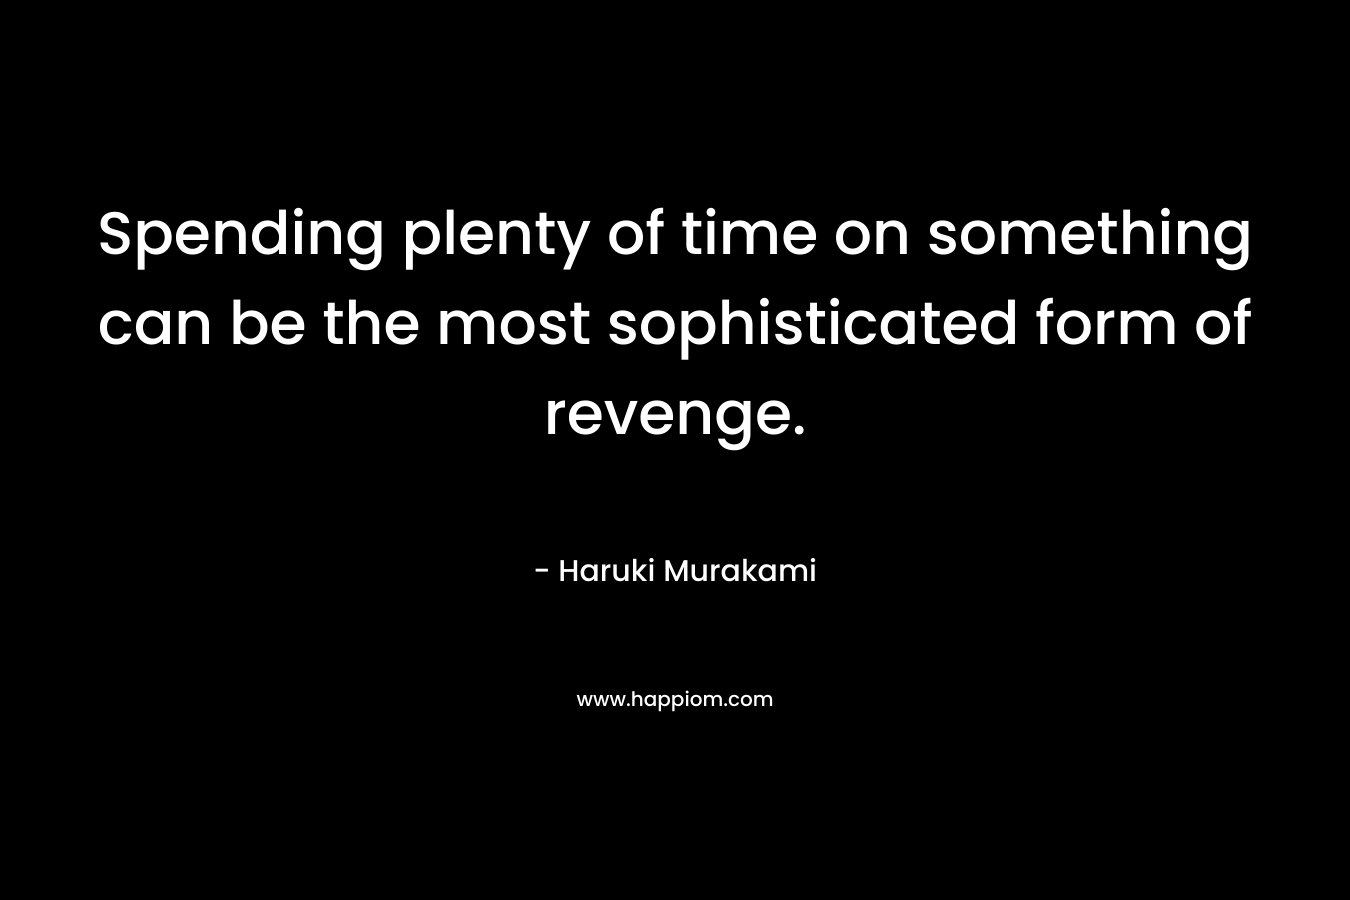 Spending plenty of time on something can be the most sophisticated form of revenge. – Haruki Murakami